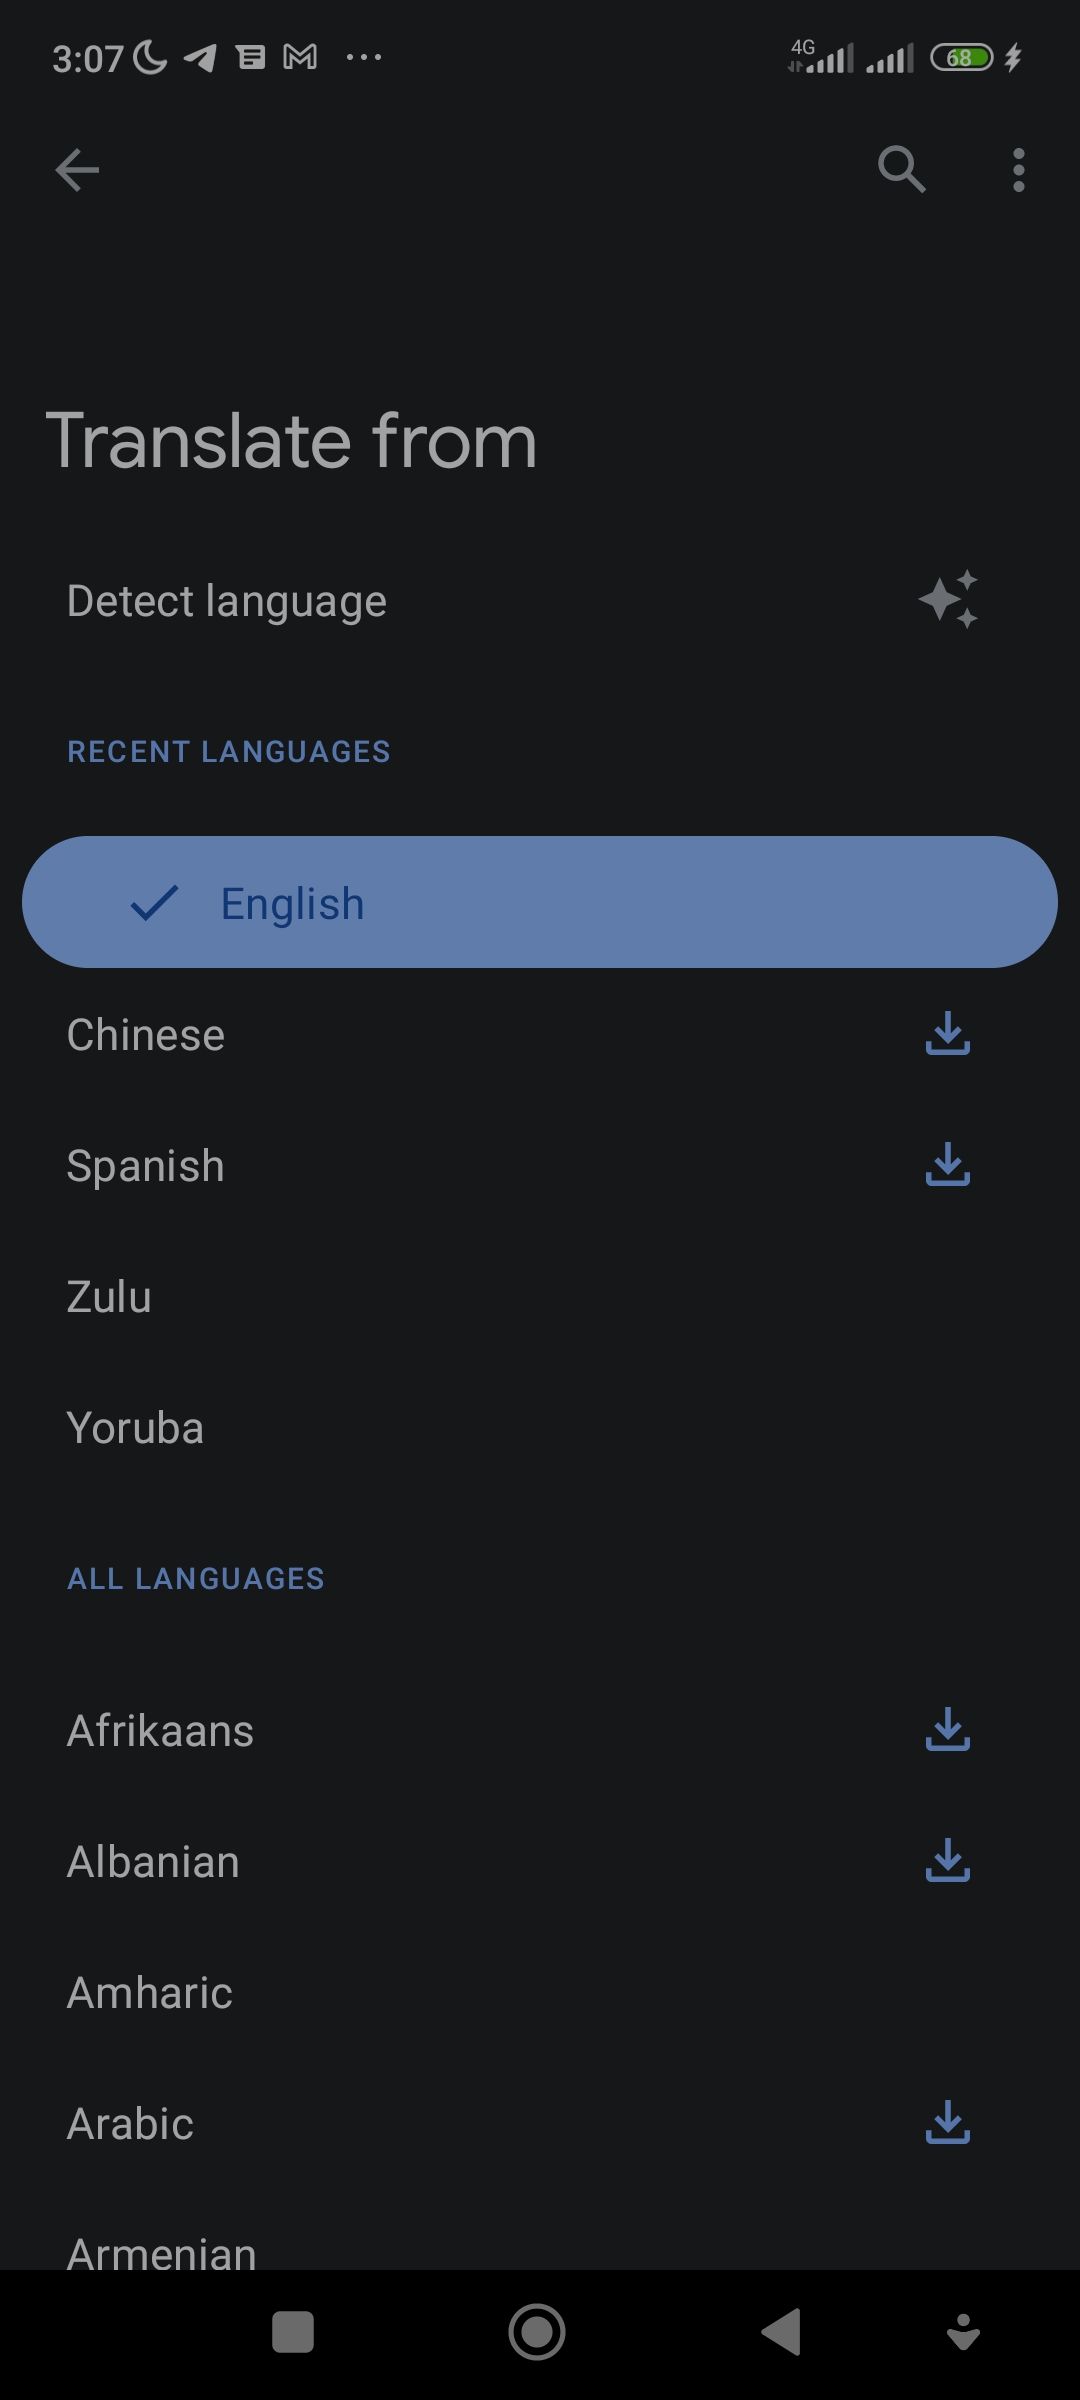 Select a language to translate from on Google Translate